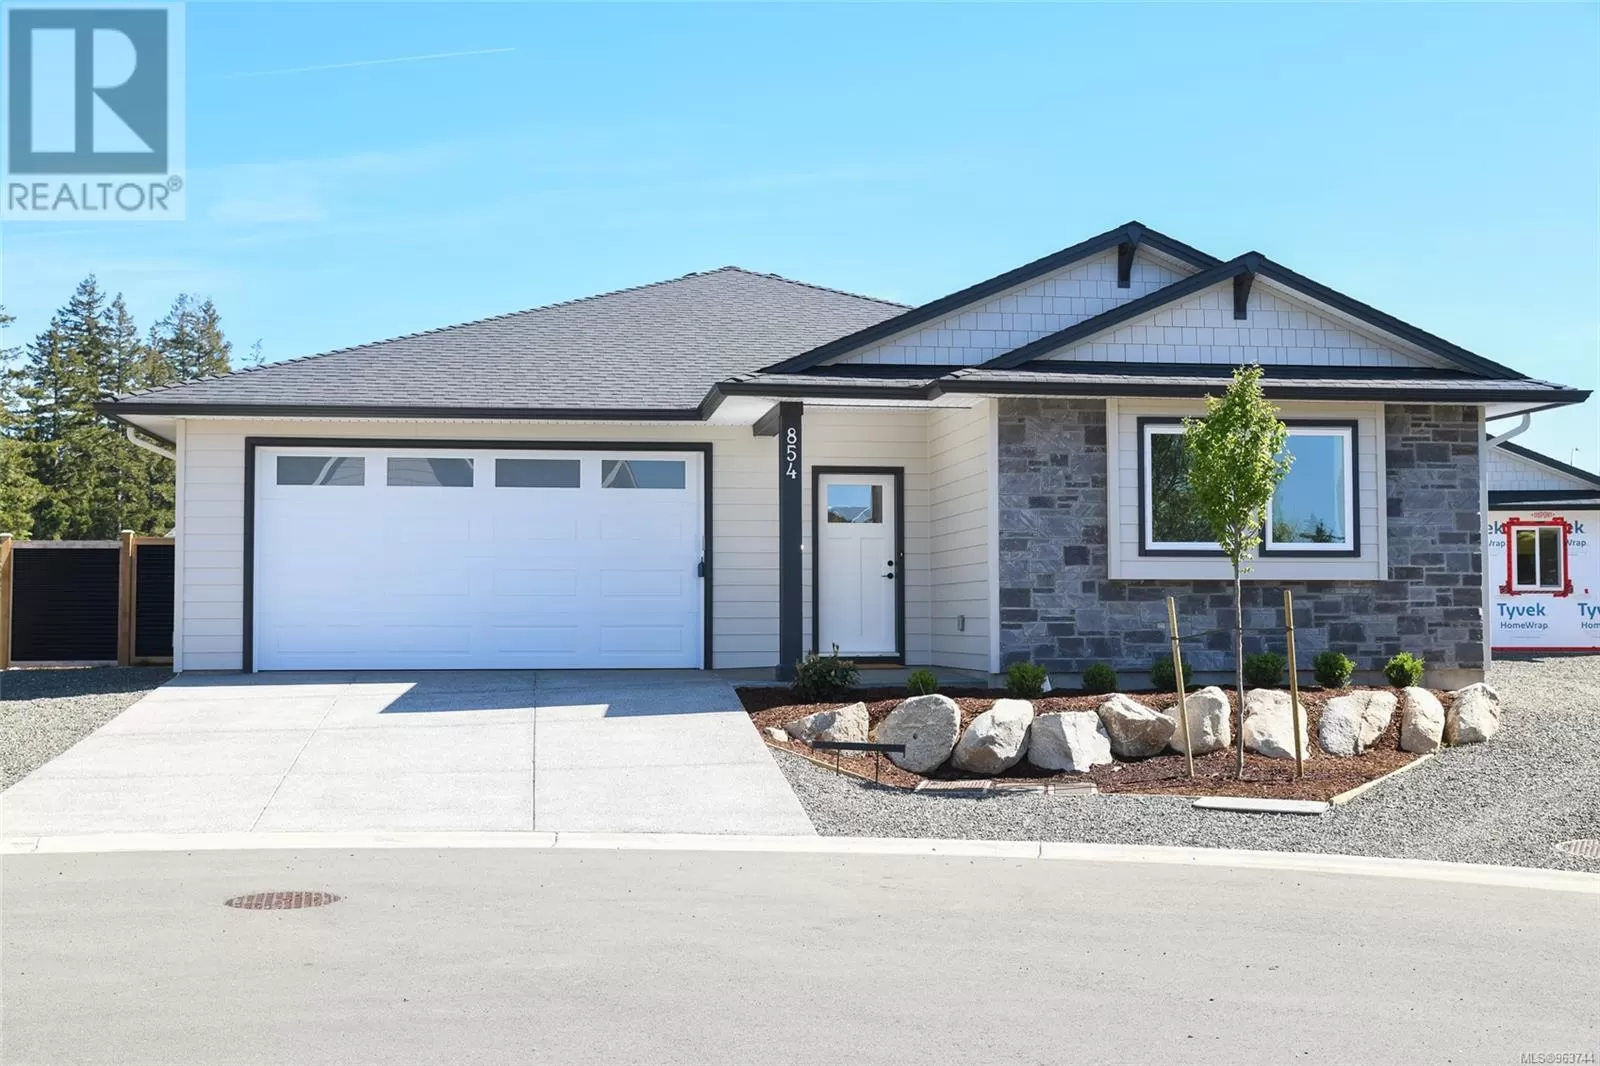 House for rent: 854 Tracker Pl, Comox, British Columbia V9M 4E8